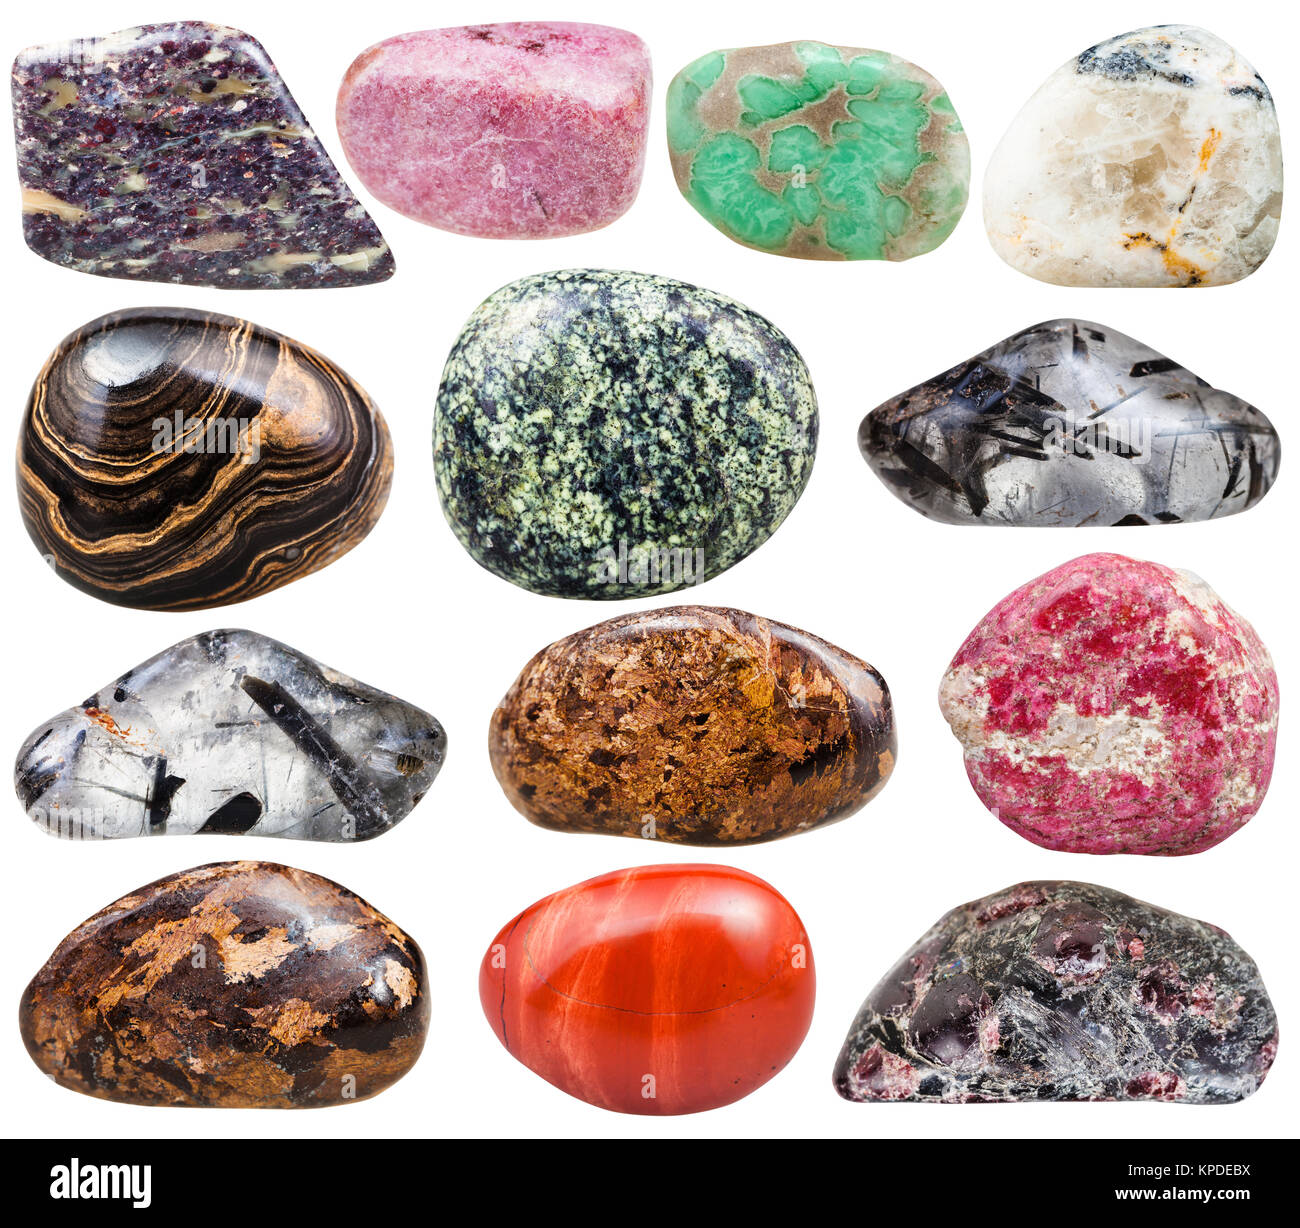 https://c8.alamy.com/compes/kpdebx/coleccion-de-minerales-naturales-piedras-preciosas-volteada-kpdebx.jpg